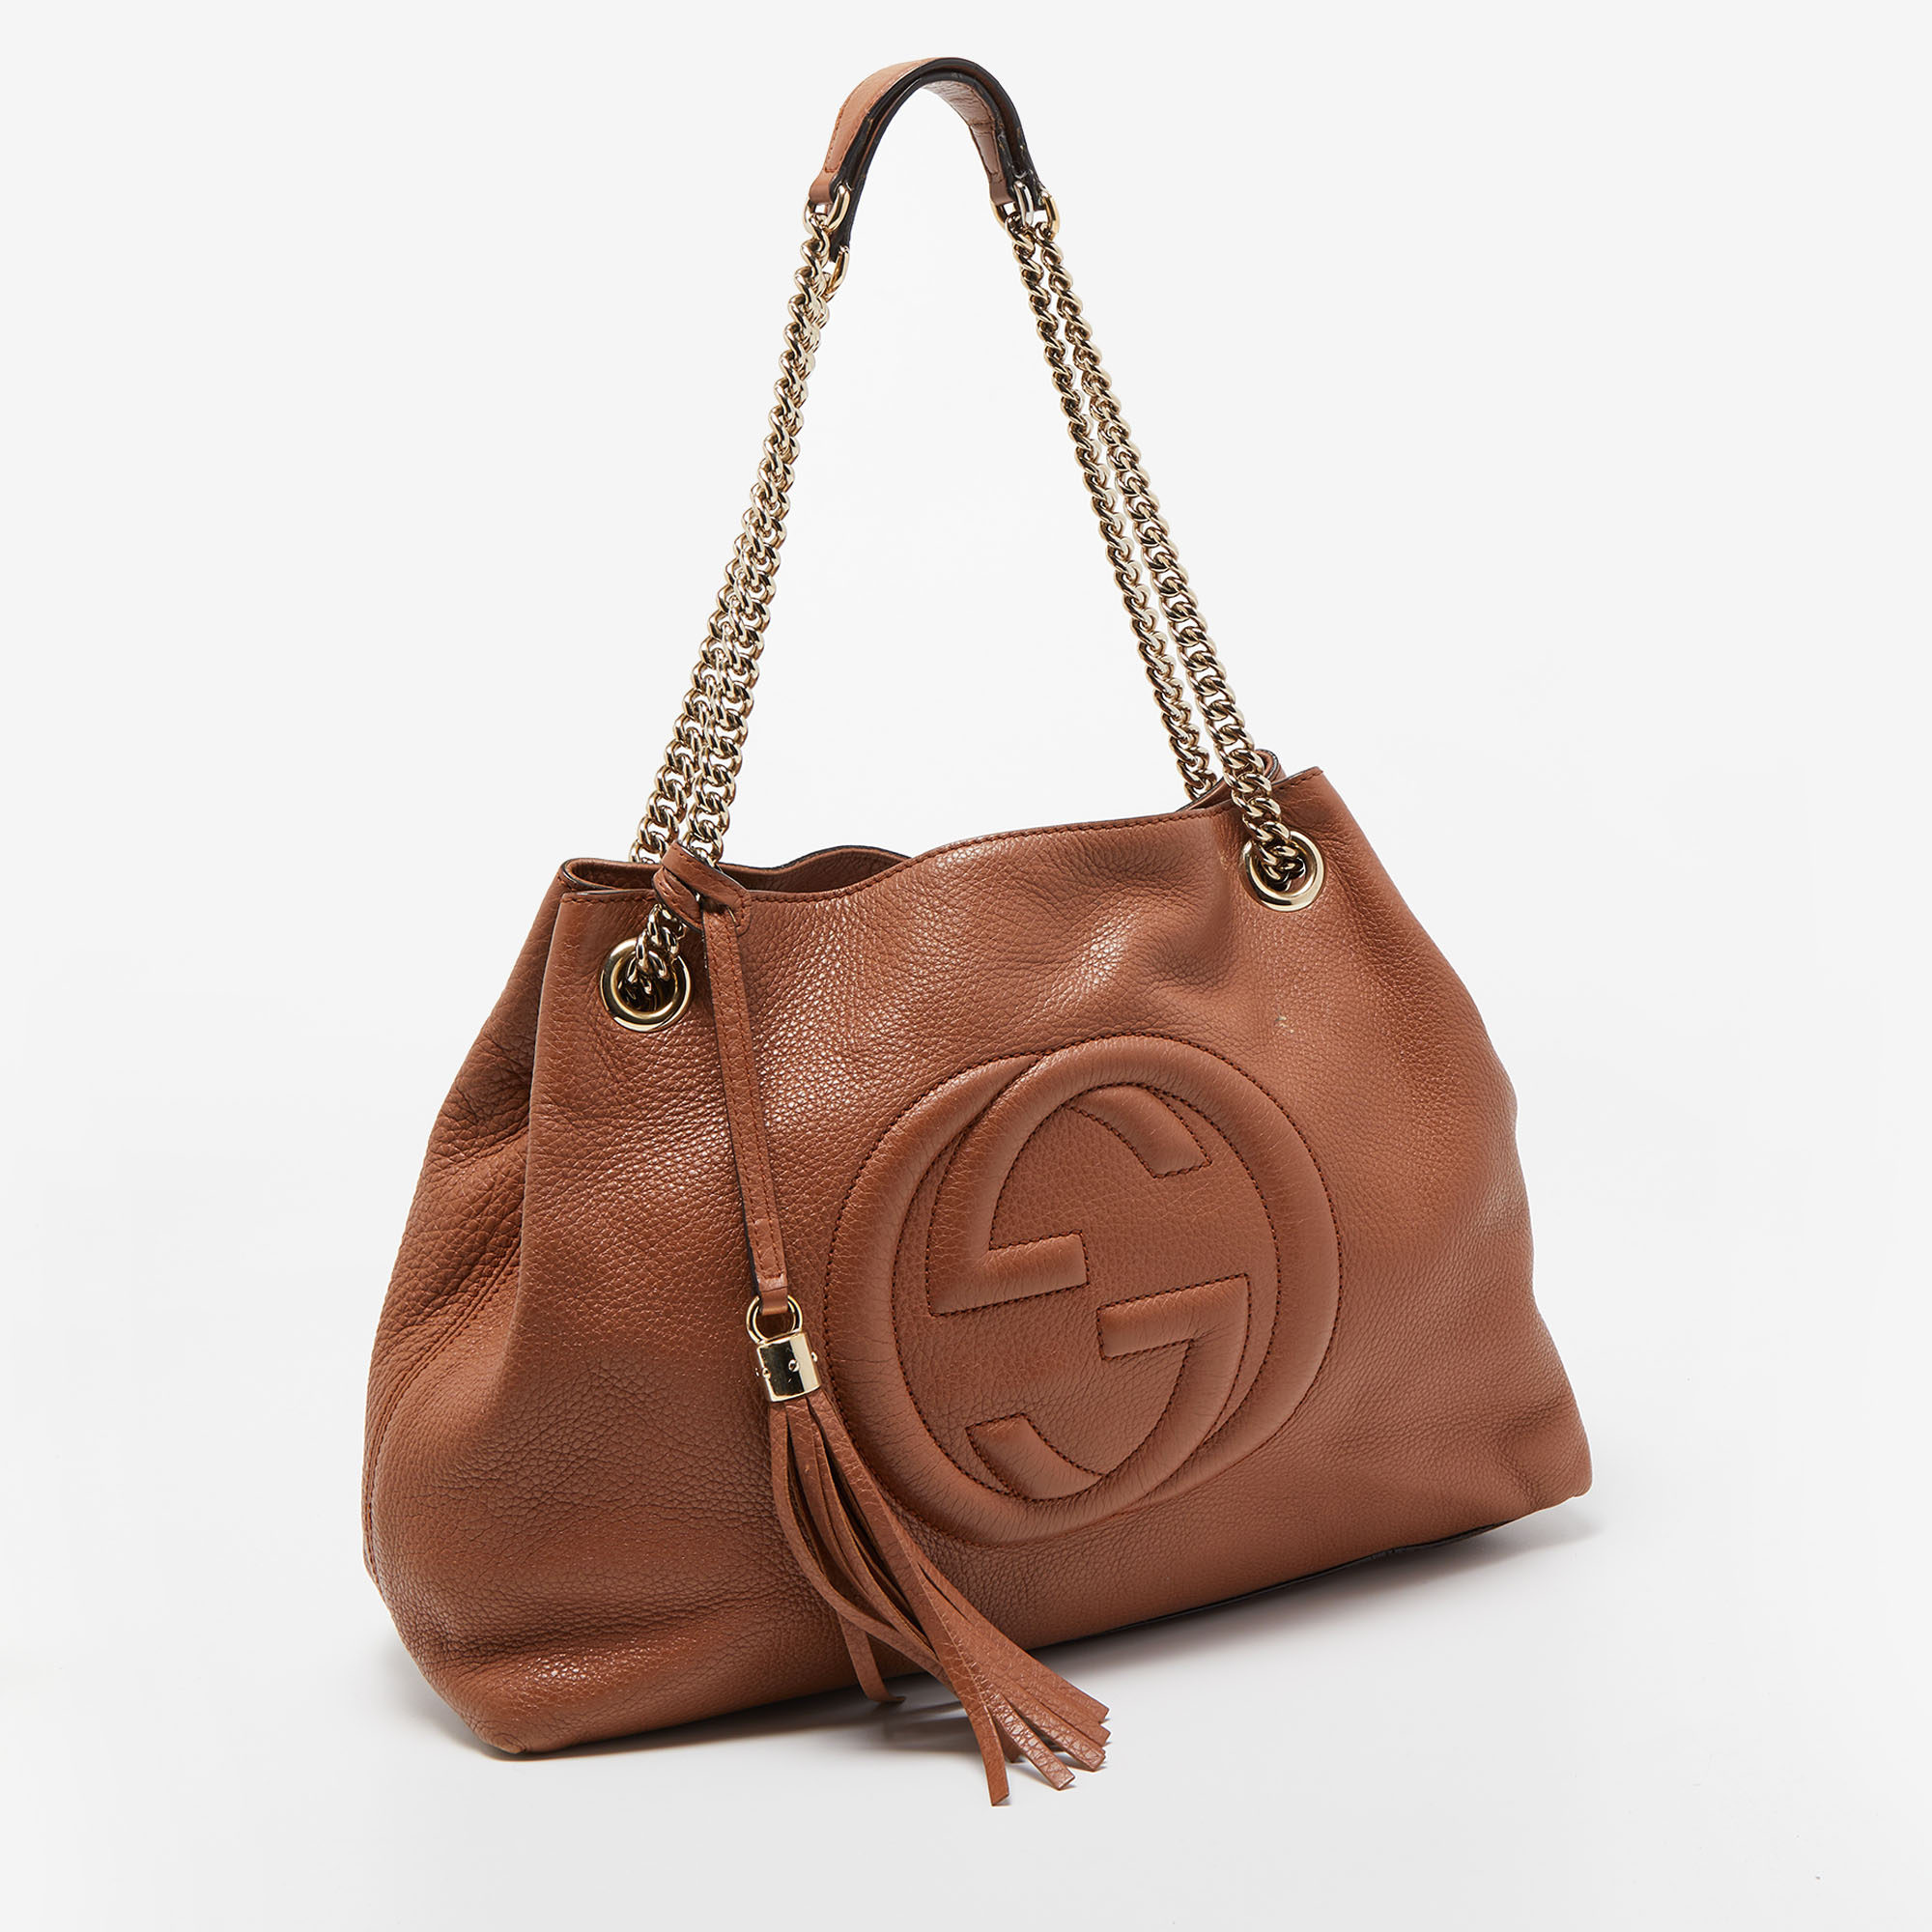 Gucci Brown Leather Medium Soho Chain Shoulder Bag